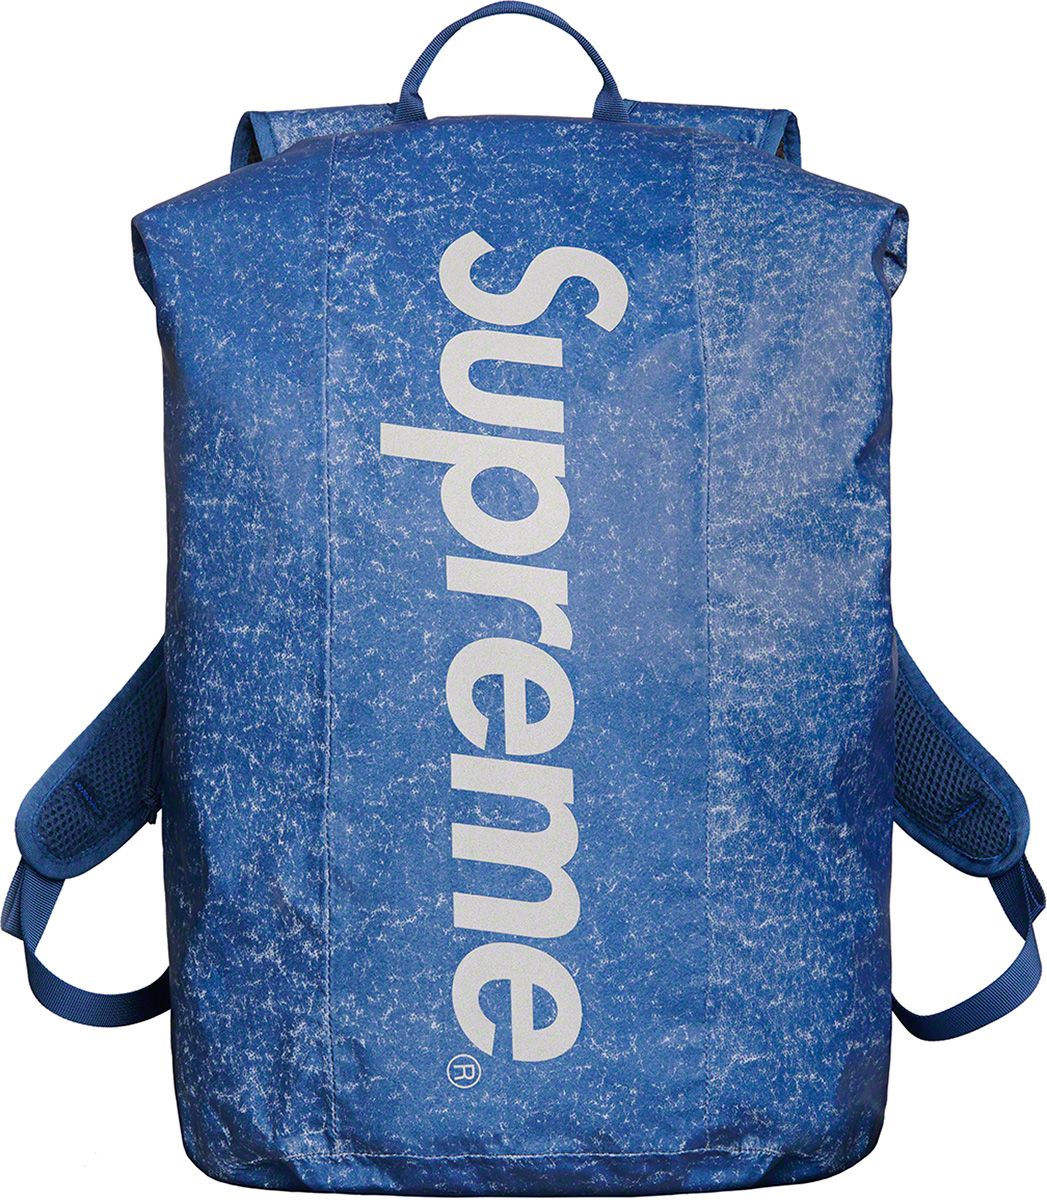 Waterproof Reflective Speckled Shoulder Bag - Fall/Winter 2020 